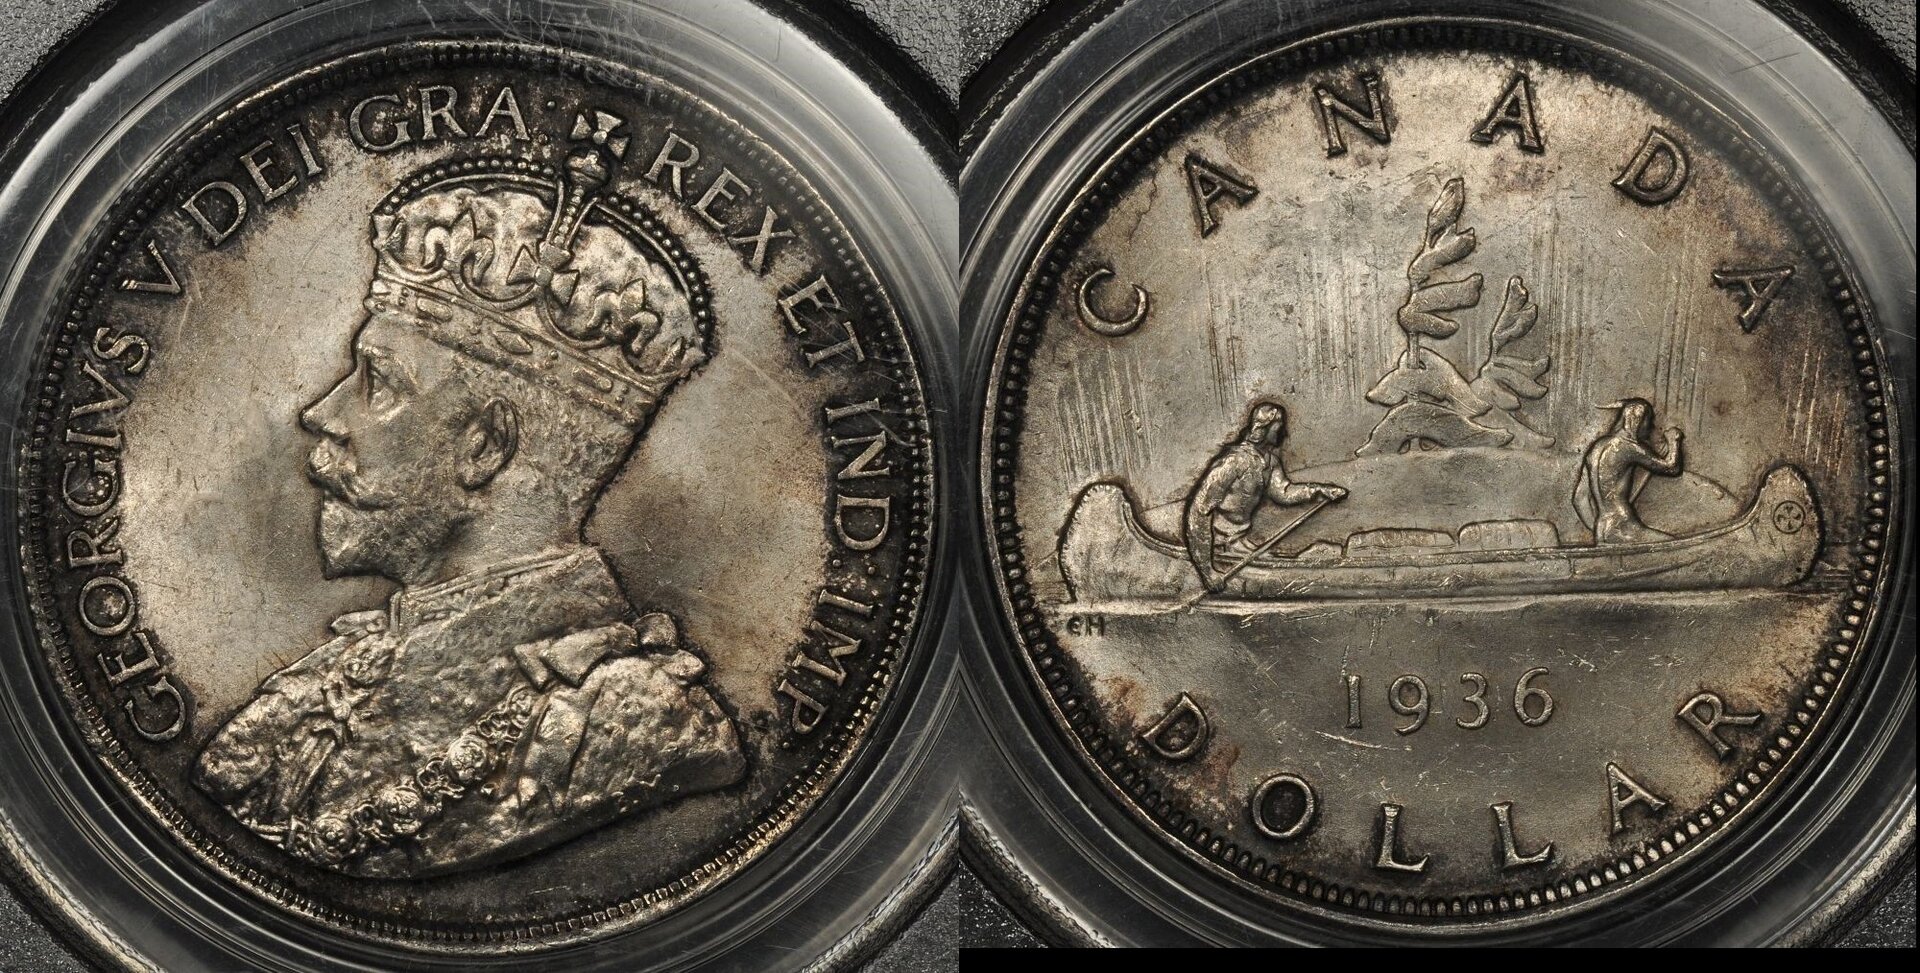 1936 PCGS Ms-63 Canada Silver Dollar Green Label  $78. + $3.75  332721864270  jkcoins a.jpg